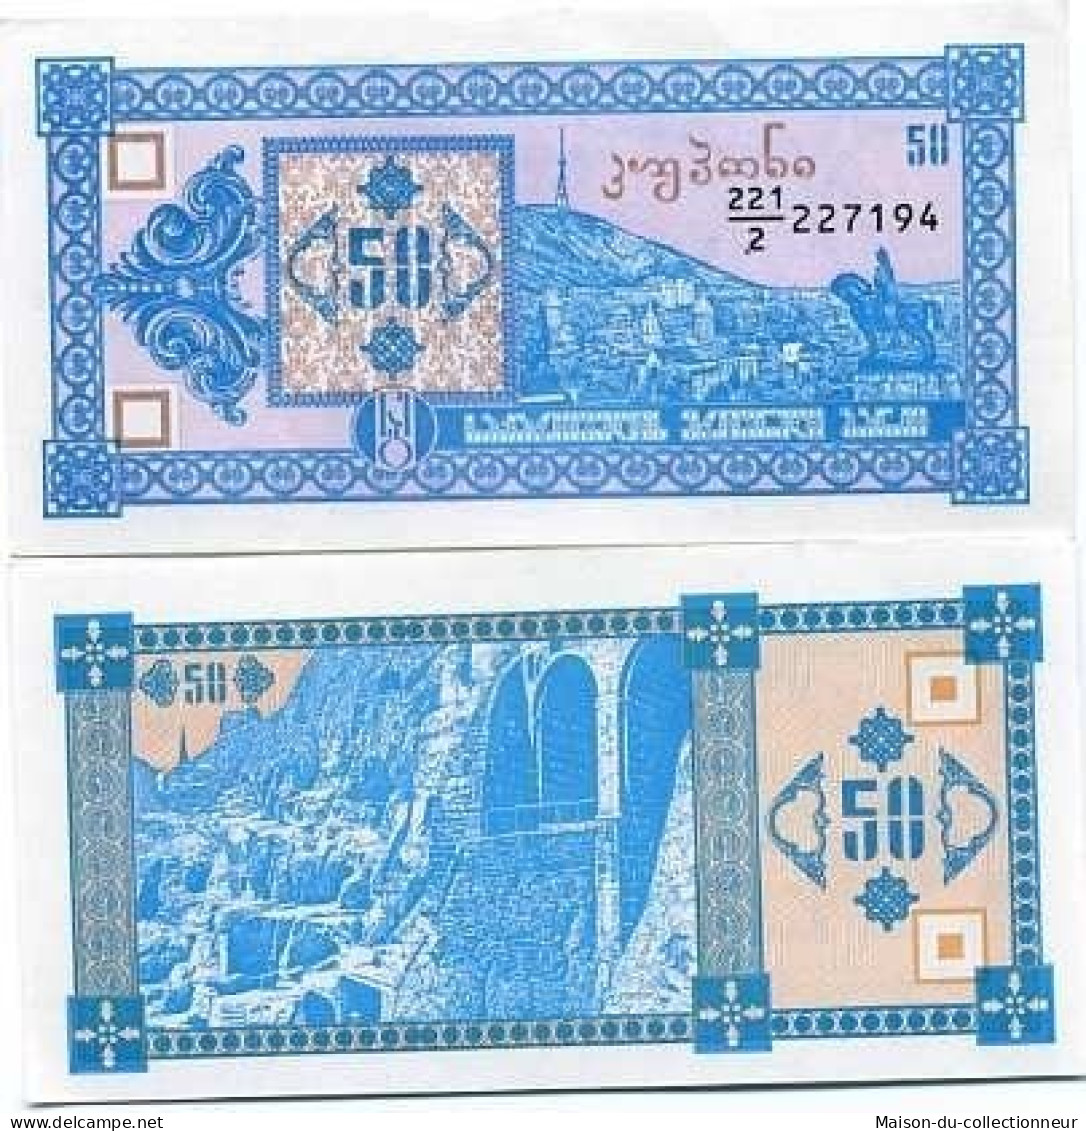 Billets De Banque Georgie Pk N° 37 - 50 Laris - Georgië